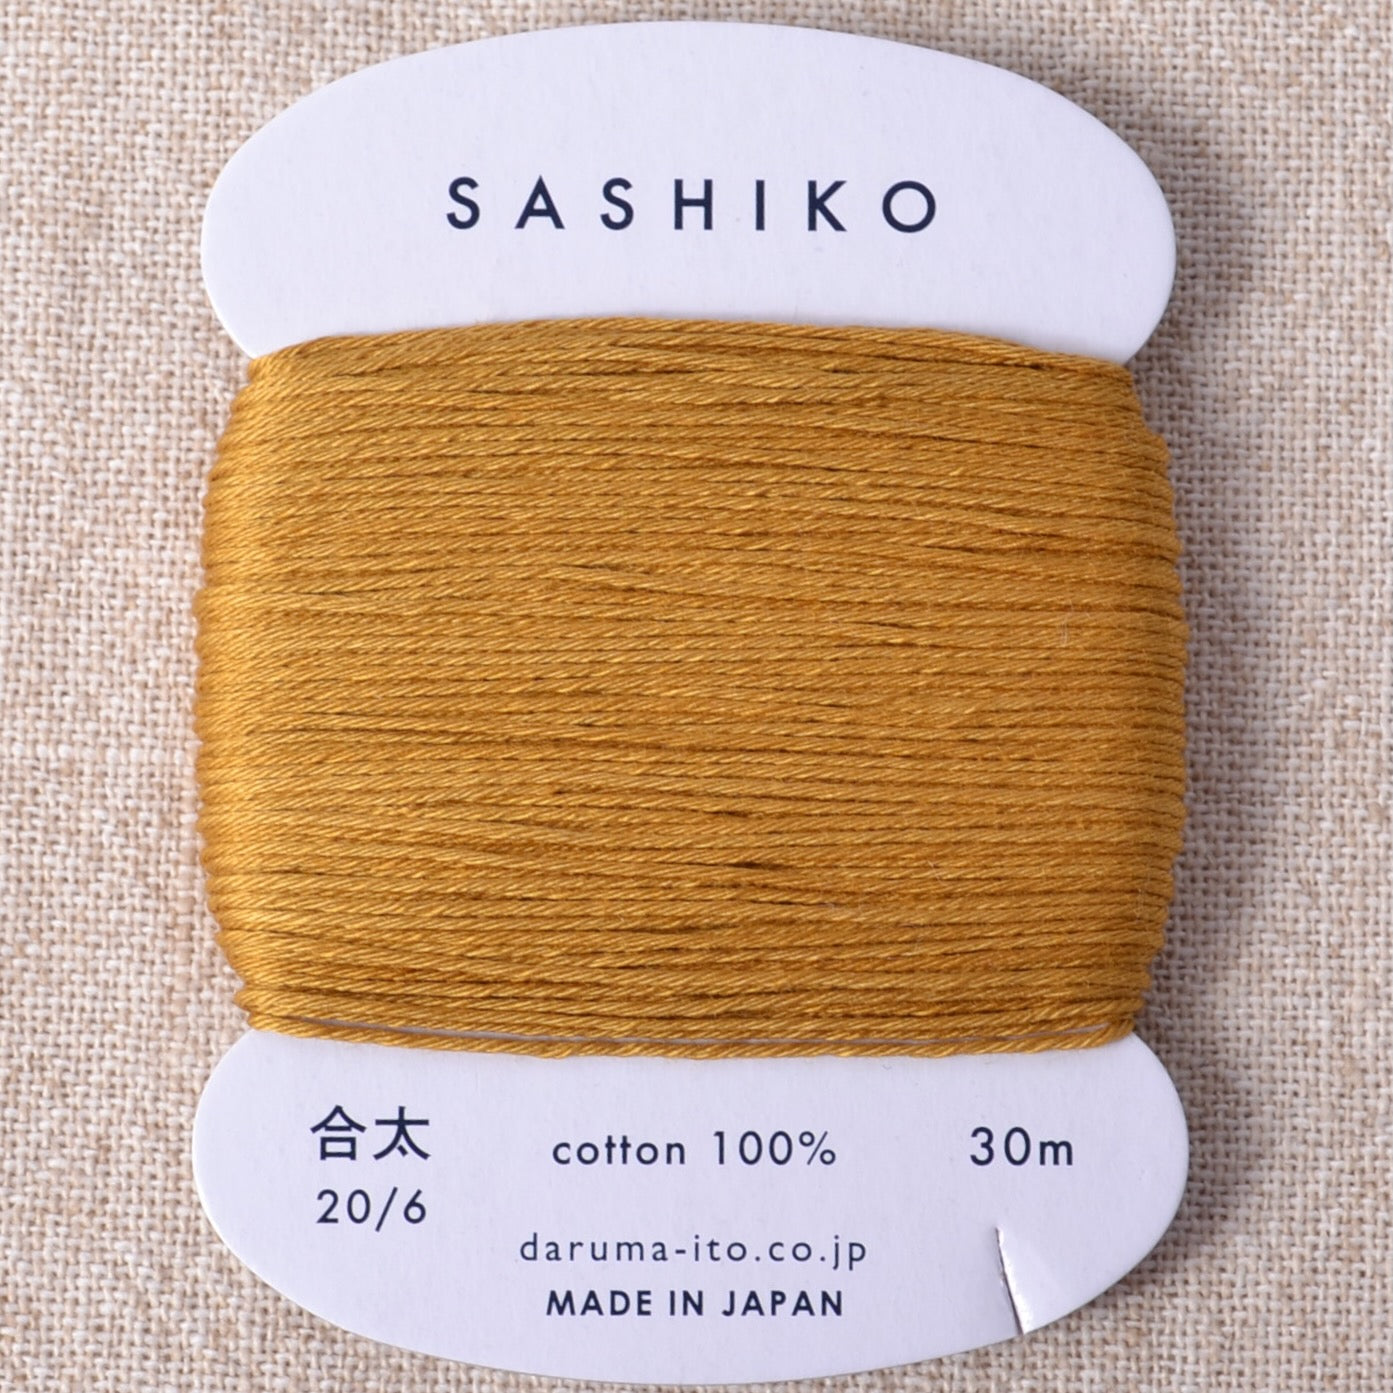 Daruma sashiko thread